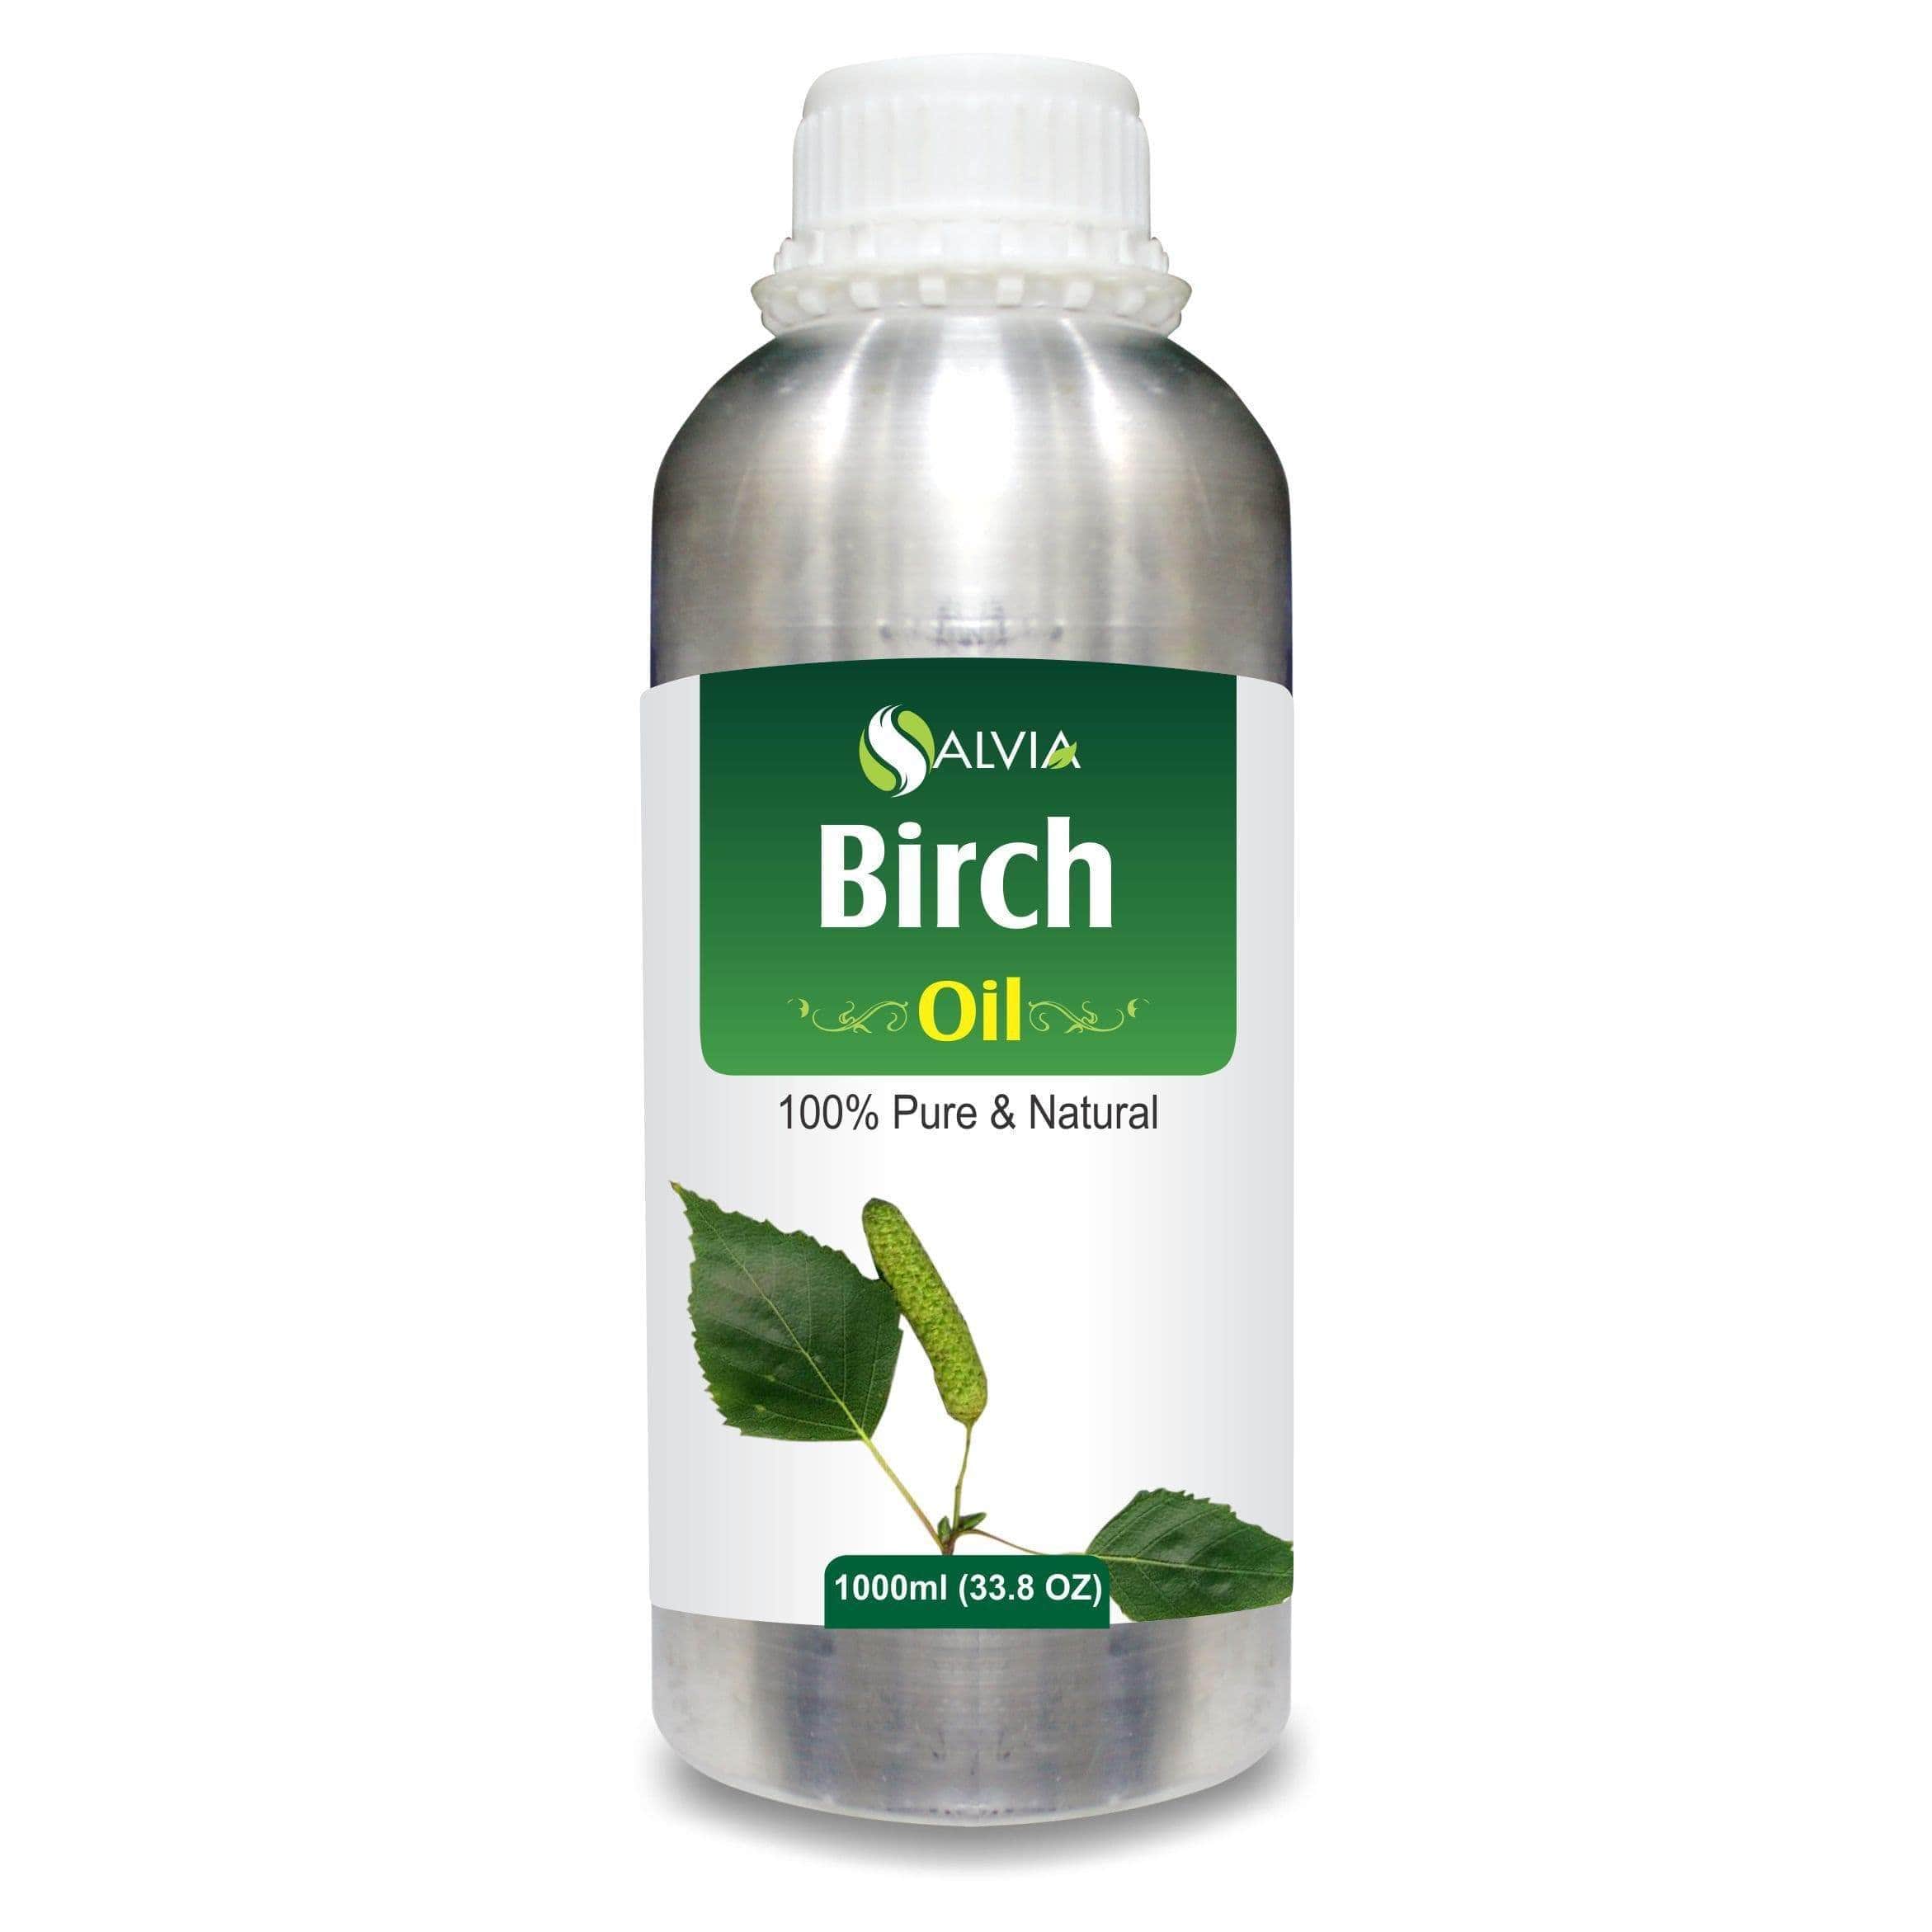 birch oil for pain